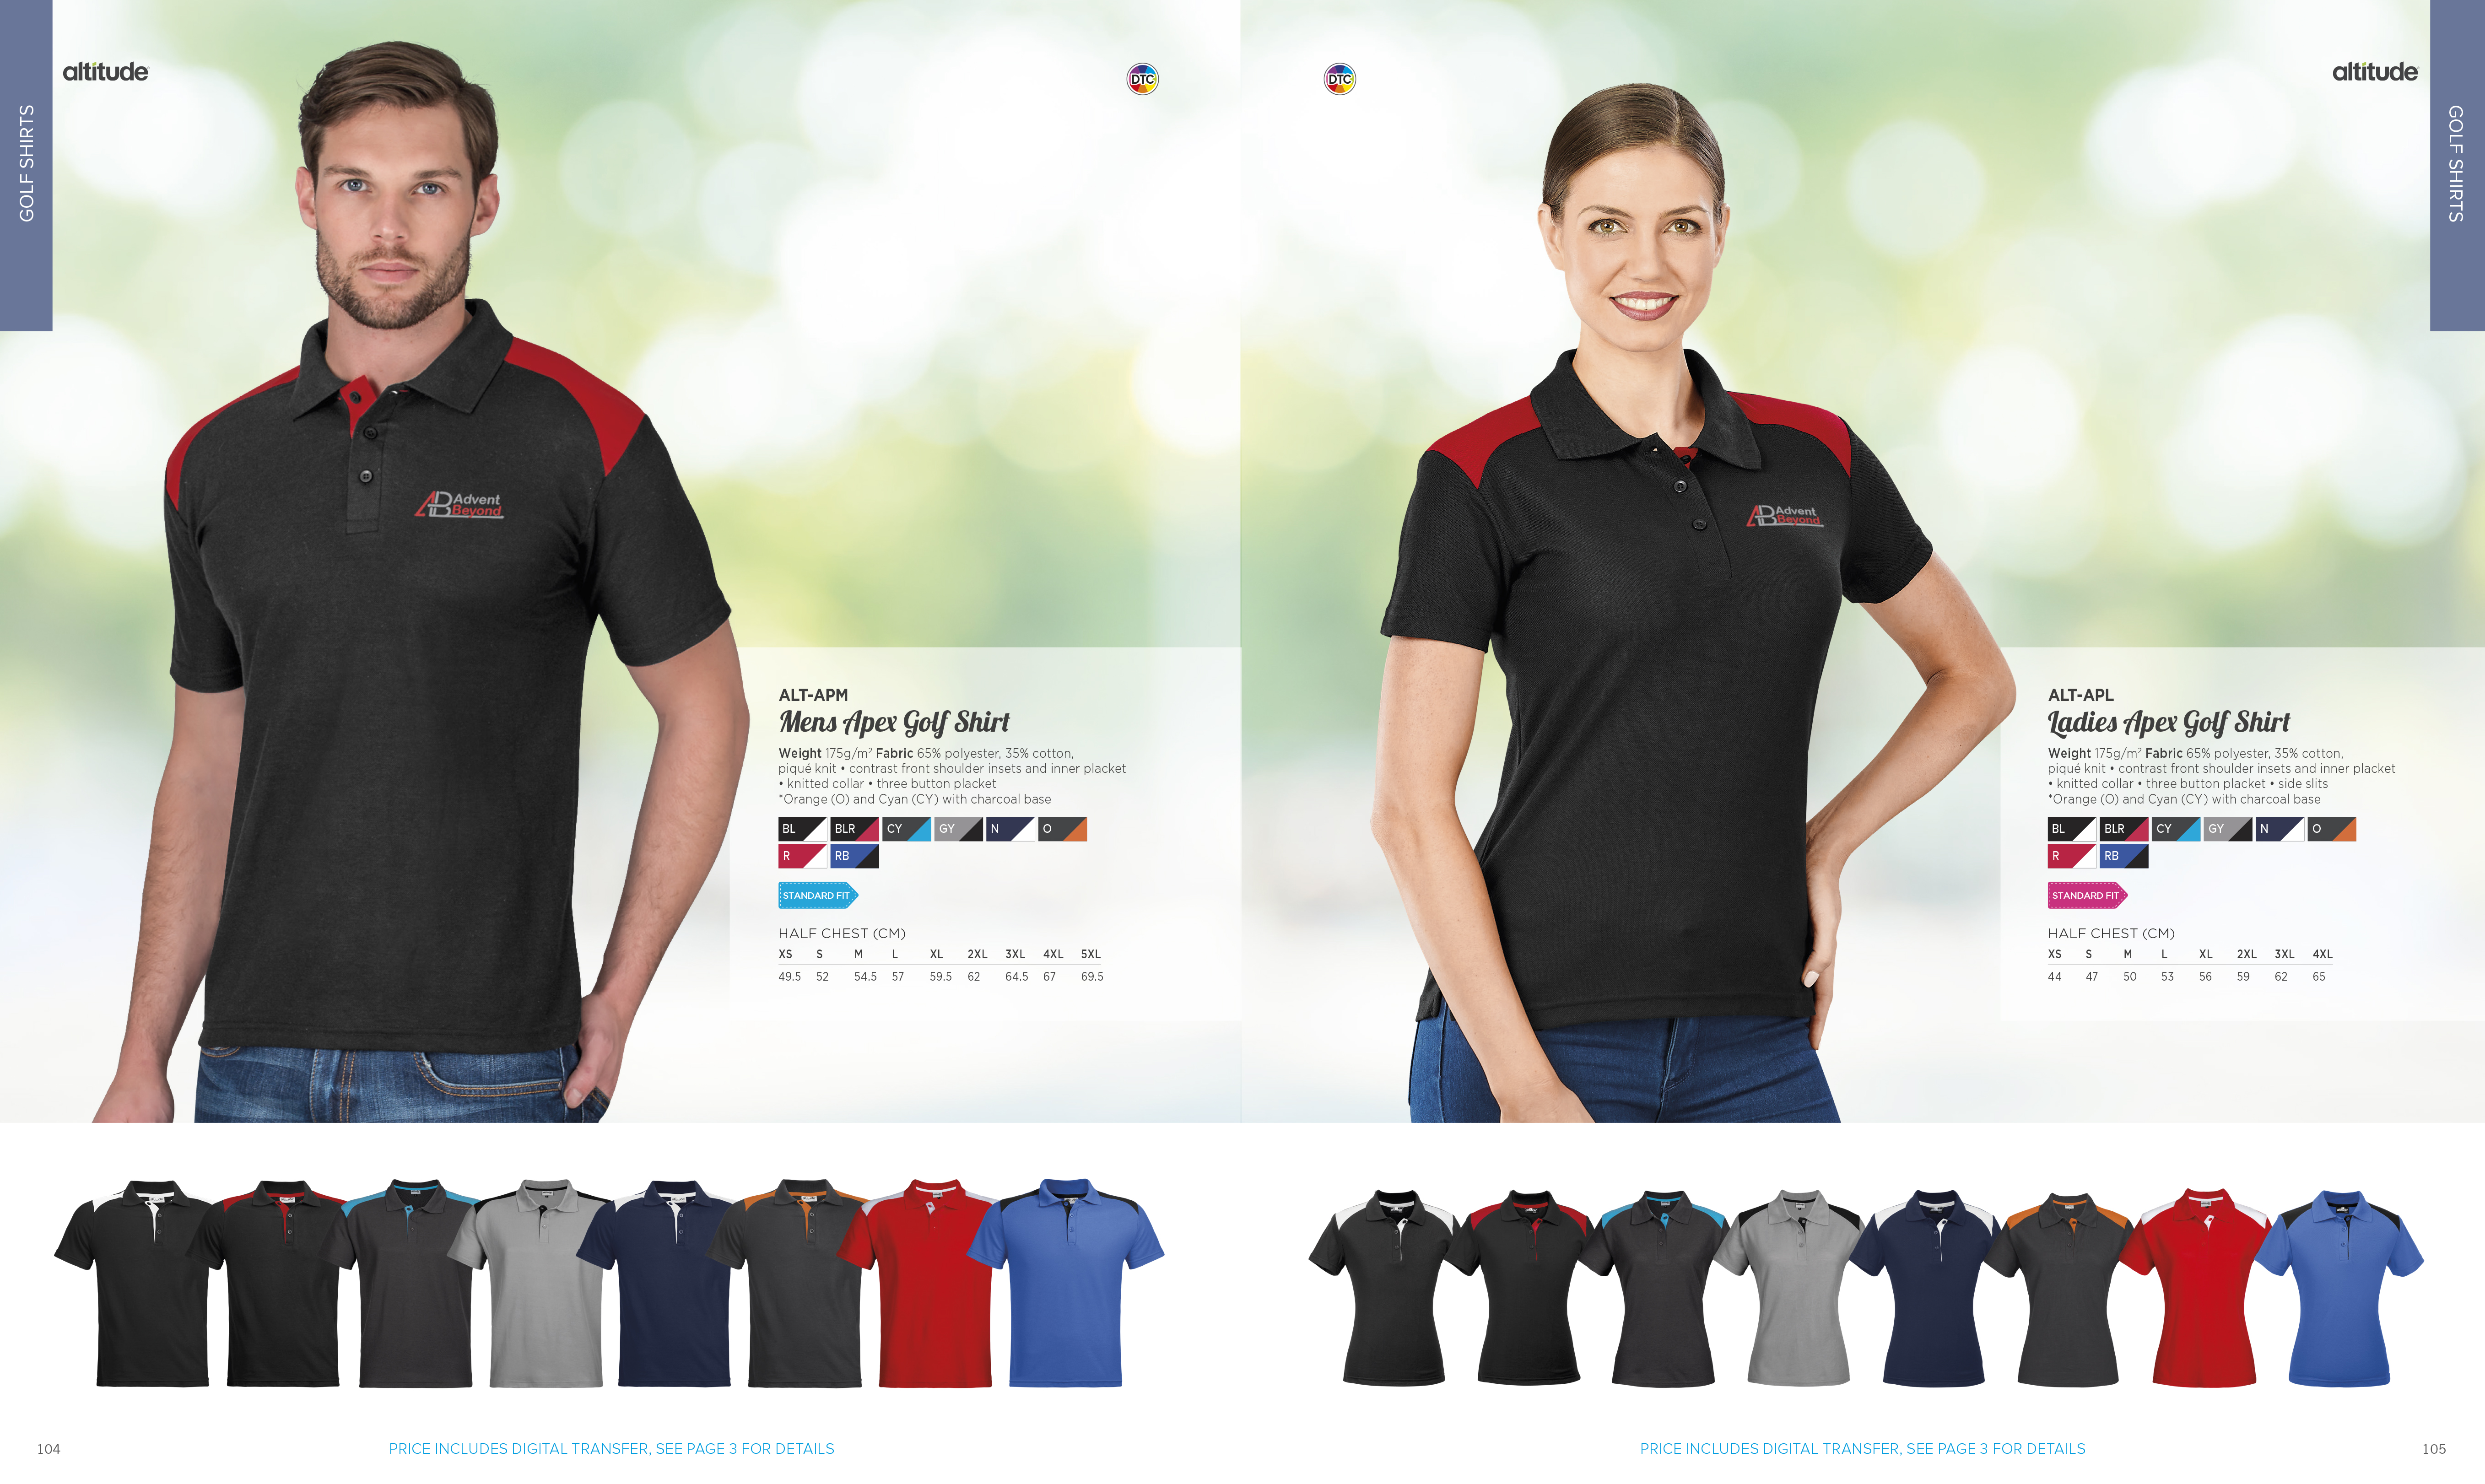 ALT-APL - Ladies Apex Golf Shirt - Catalogue Image